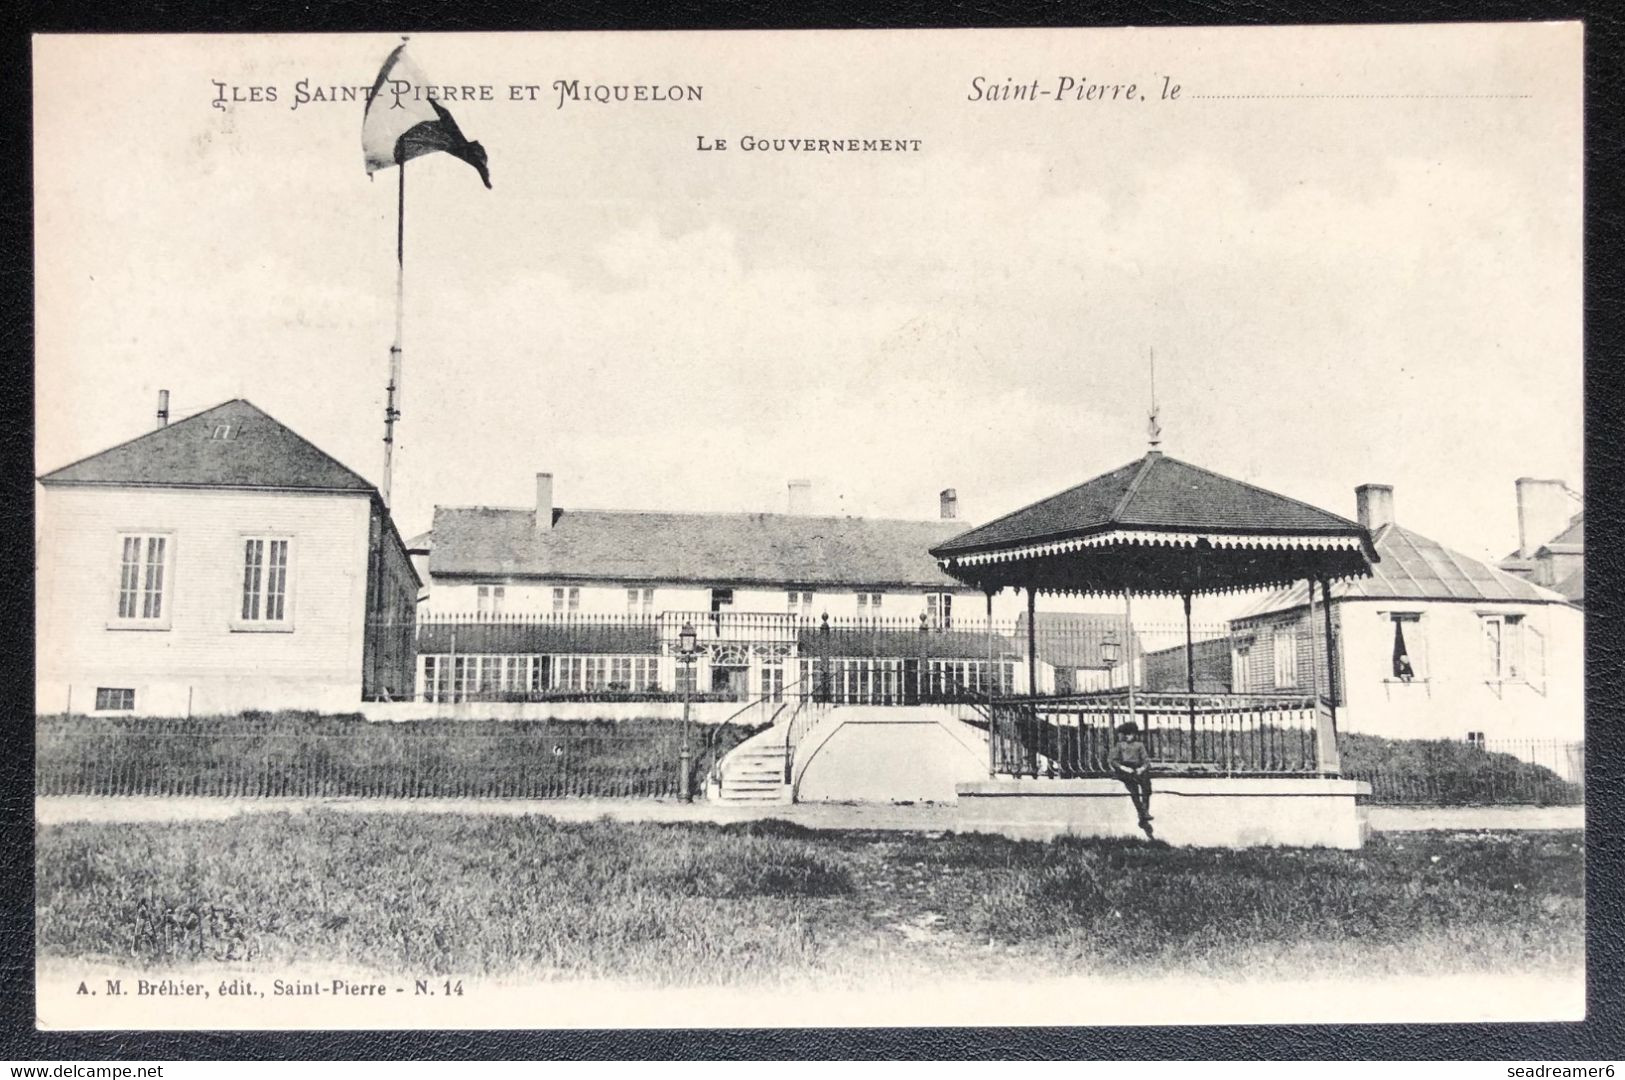 Carte Postale Originale De Saint-Pierre Et Miquelon 1900/1920 "Le Gouvernement" TTB - Saint-Pierre-et-Miquelon